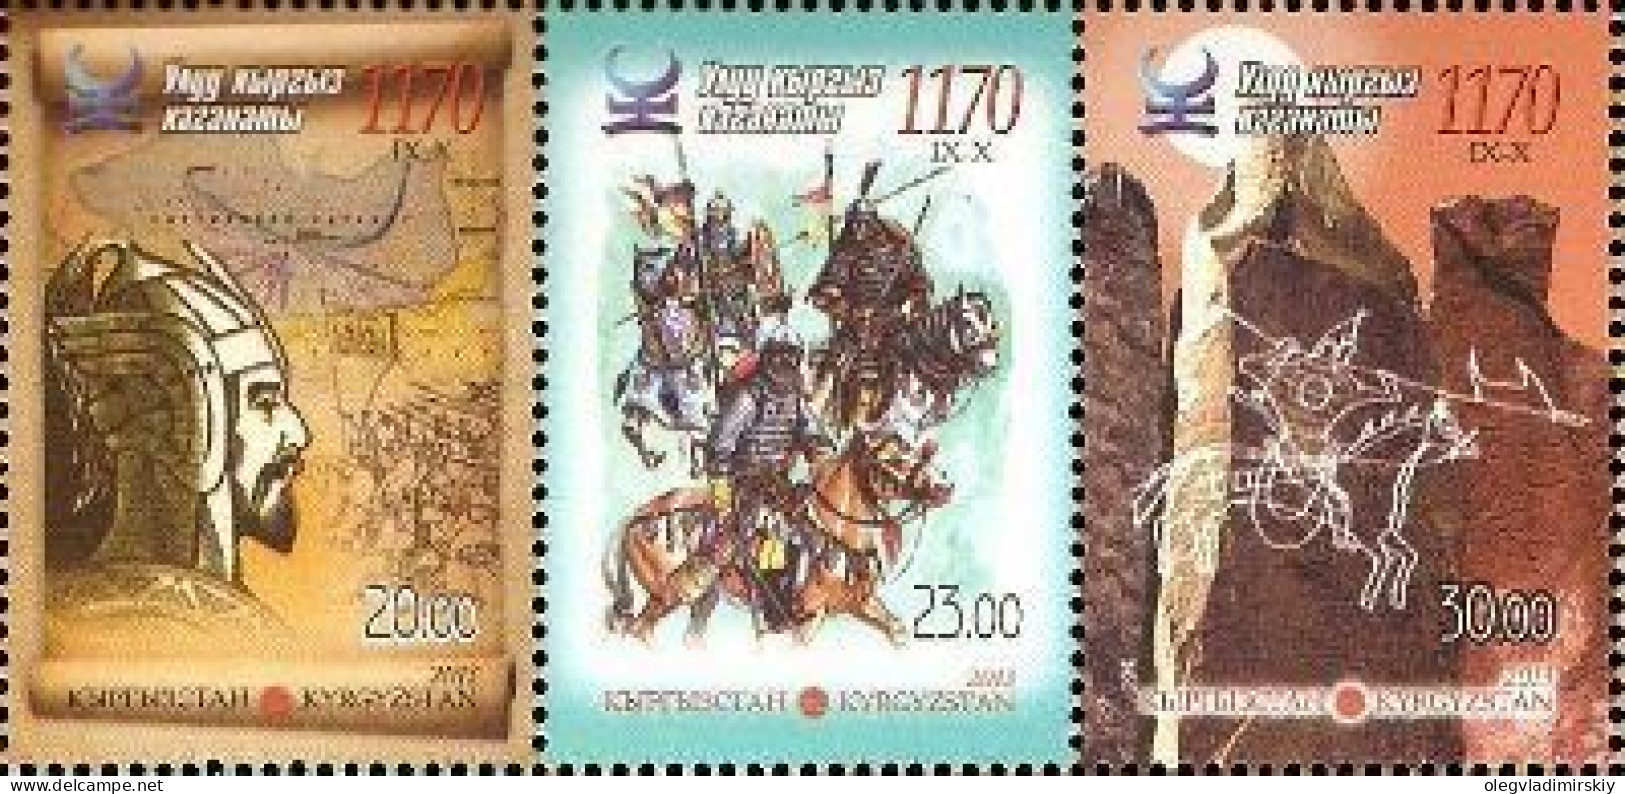 Kyrgyzstan 2013 Great Kyrgyz Kaganate 1170 Years Set Of 3 Stamps In Strip MNH - Kirgizië